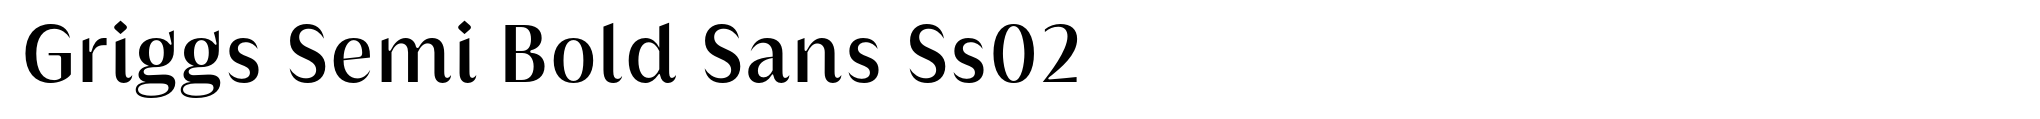 Griggs Semi Bold Sans Ss02 image